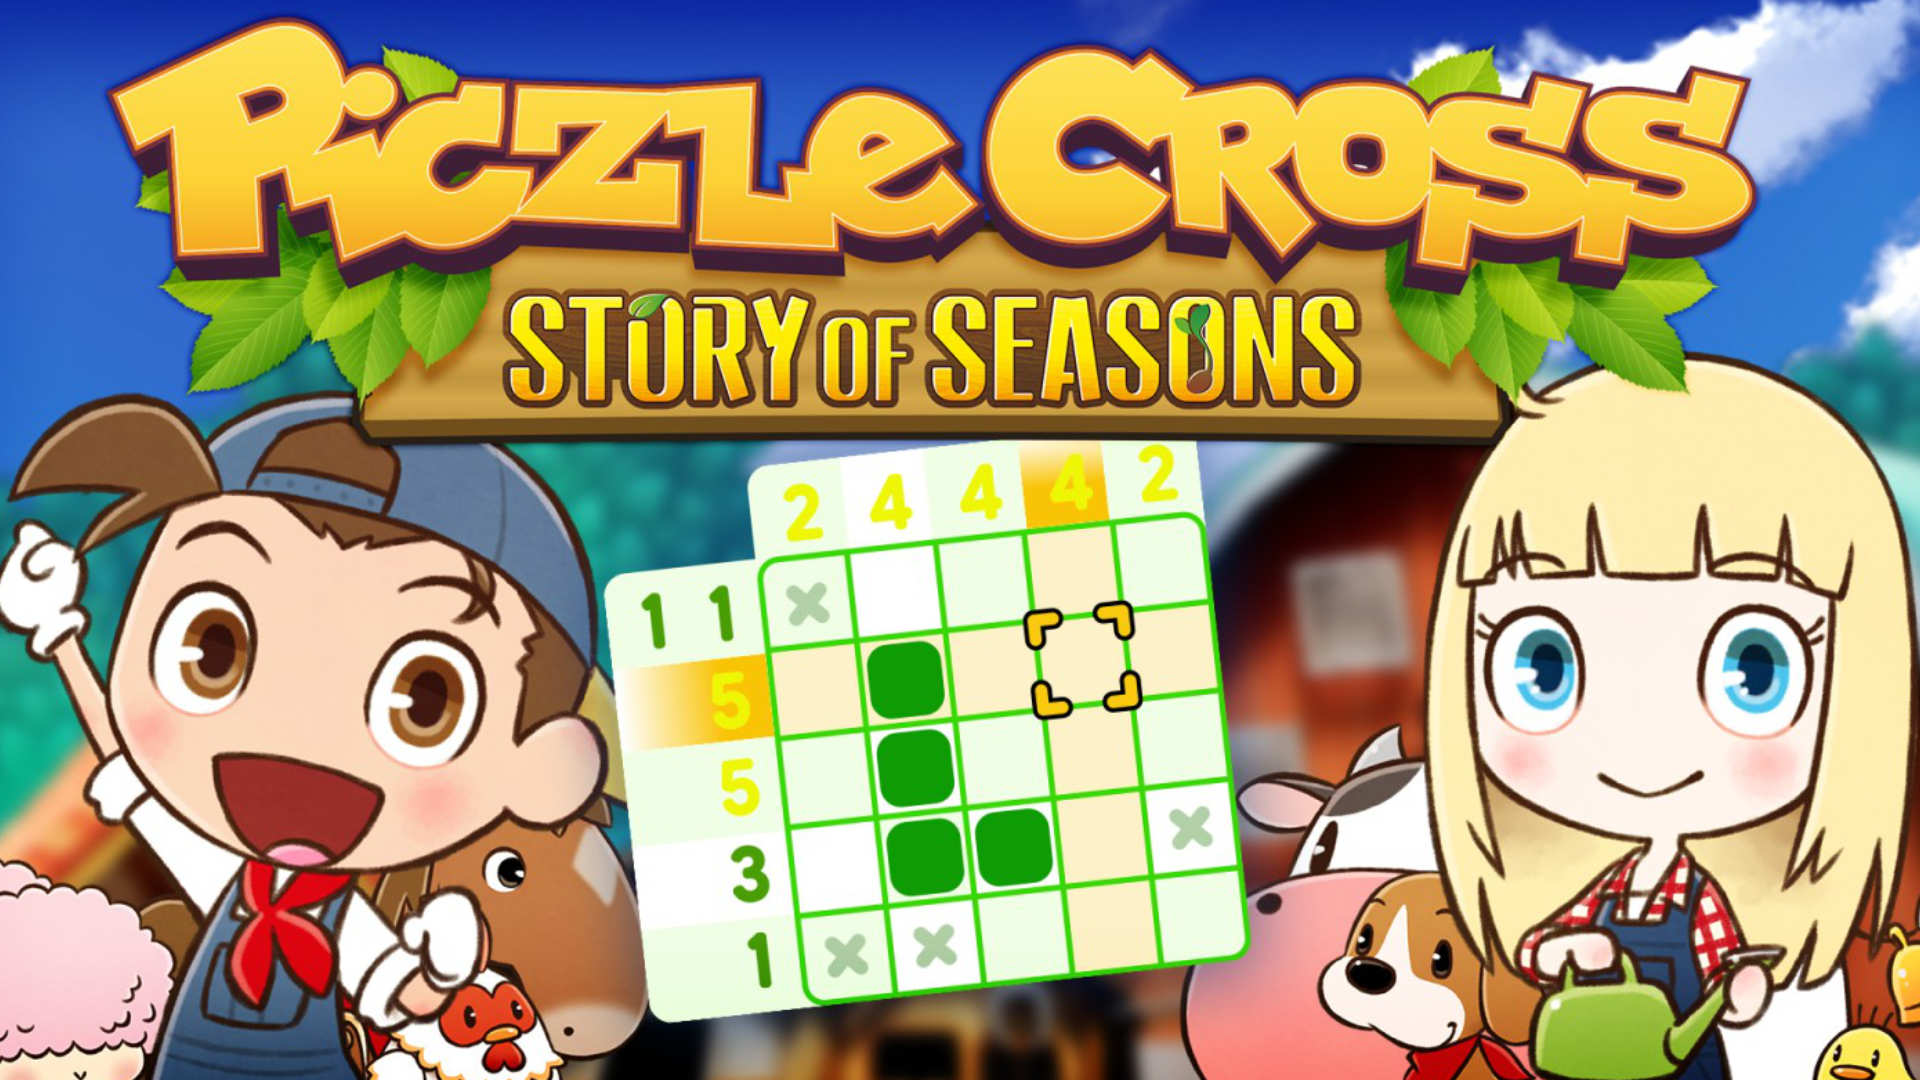 Piczle Cross Story of Seasons: Cozy Farming-Game trifft auf jede Menge Rätselspaß